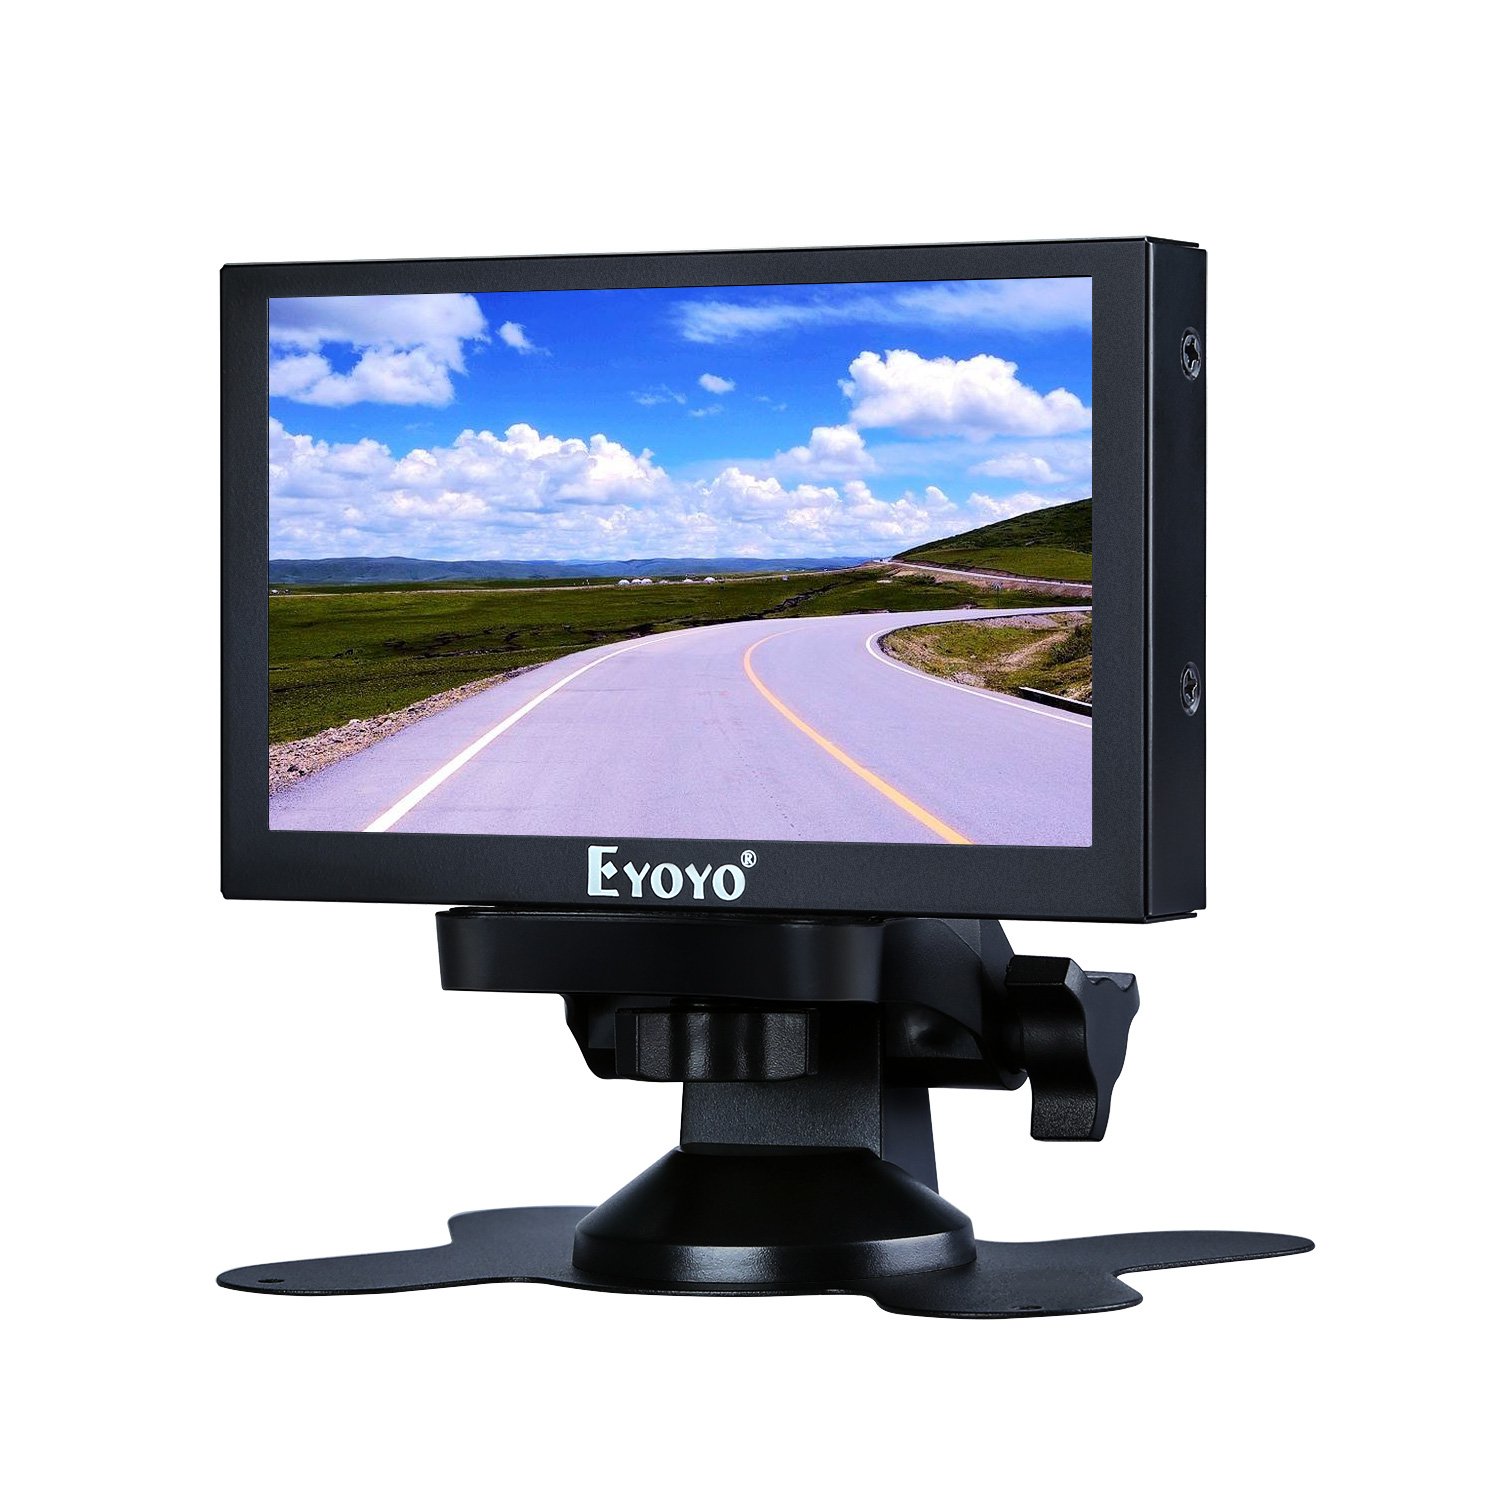 Eyoyo 5 inch Mini Monitor HD 800x480 16:9 TFT LCD Screen Display with BNC  VGA AV HDMI Input, Built-in Speaker,Small LCD Monitor